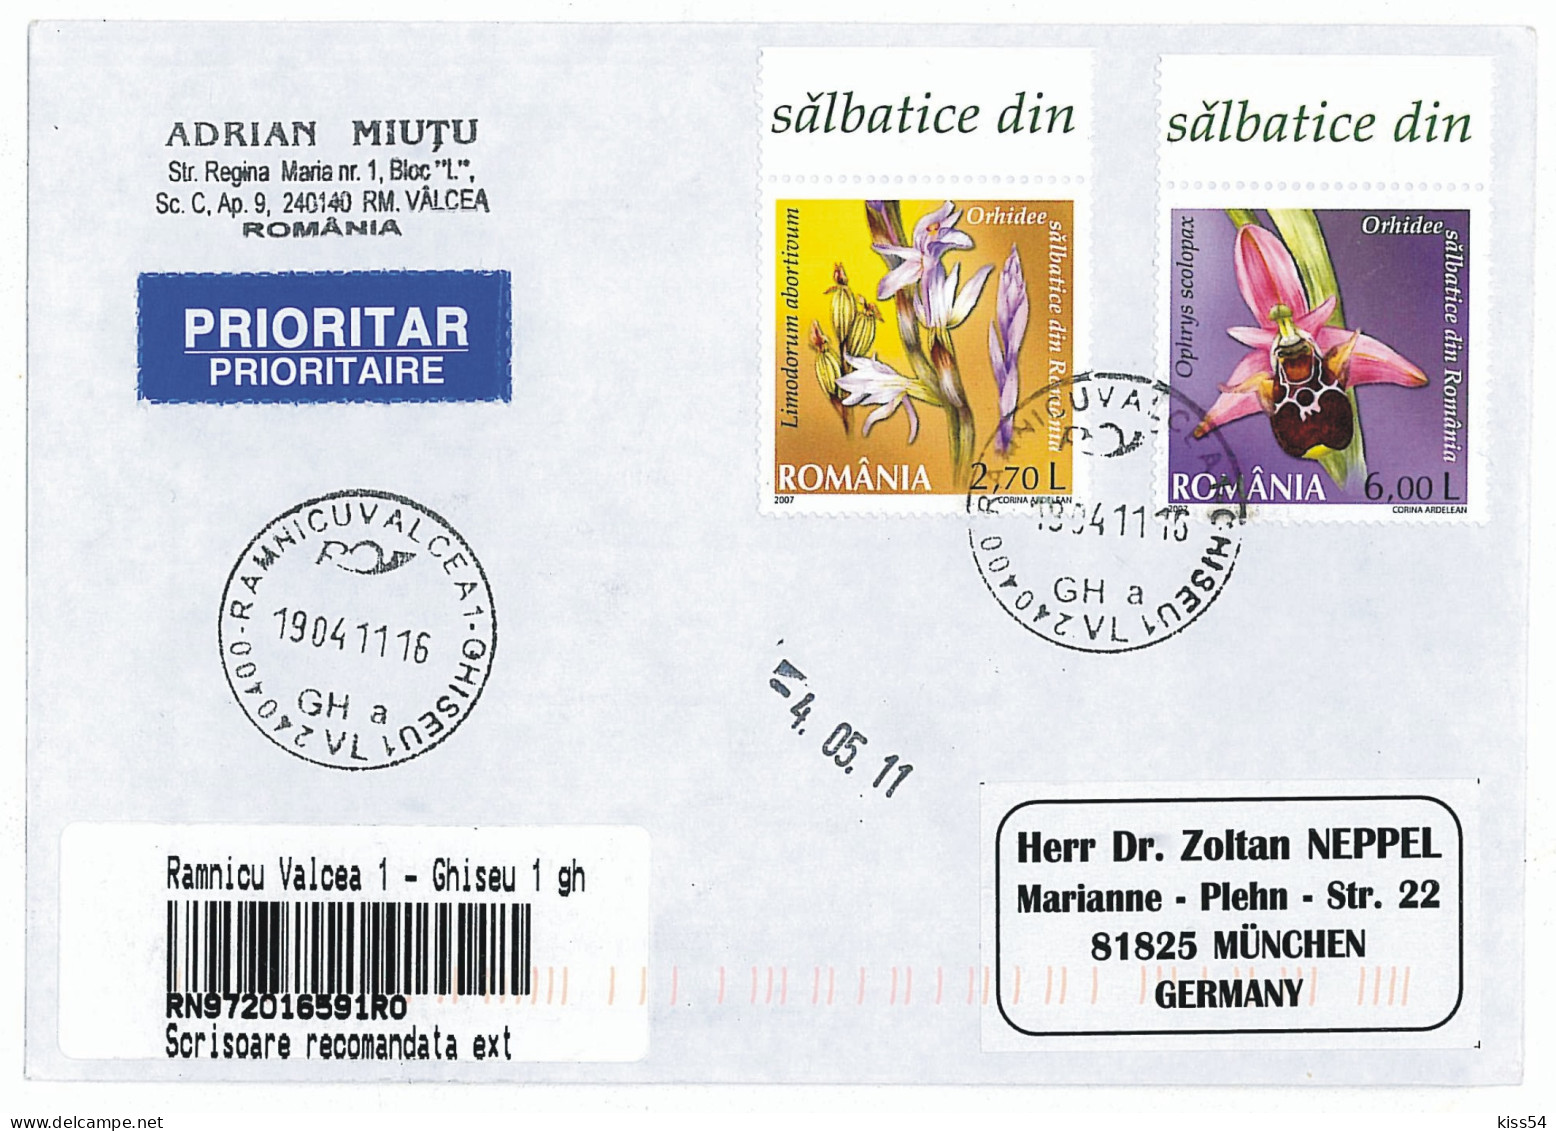 NCP 25 - 1-a ORCHIDS, Romania - INTERNATIONAL Registered - 2011 - Briefe U. Dokumente